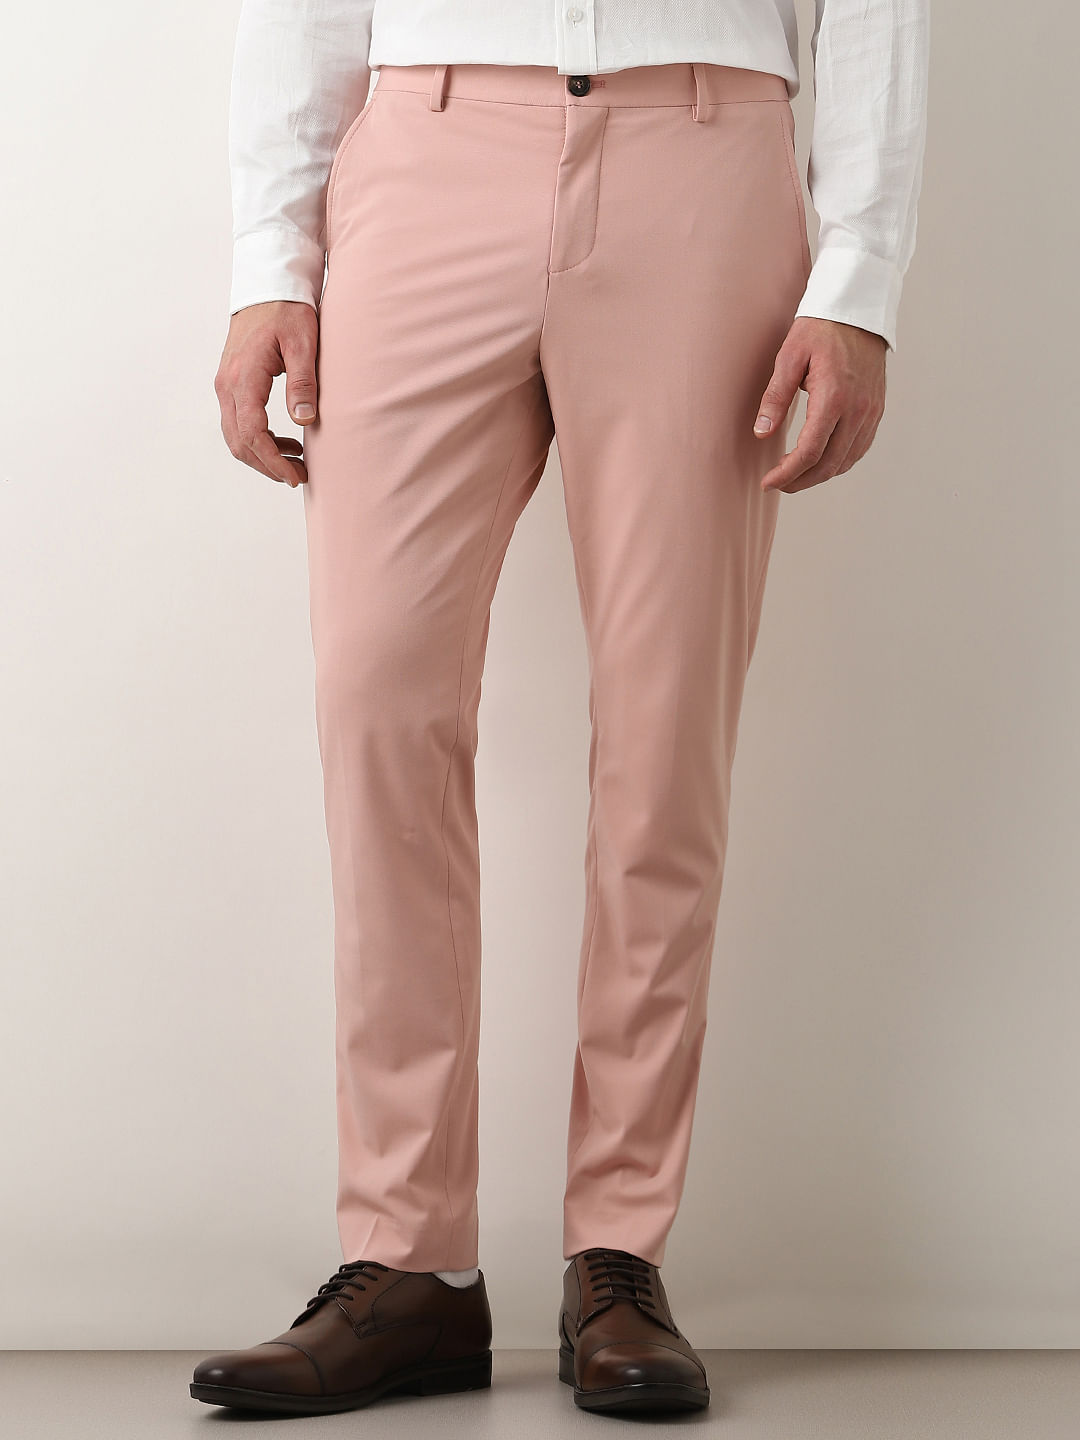 Men's Linen Pants TRUCKEE in Cinnamon. Mens Trousers. Elastic Waist. Cargo  Pants. Linen Clothing for Men - Etsy